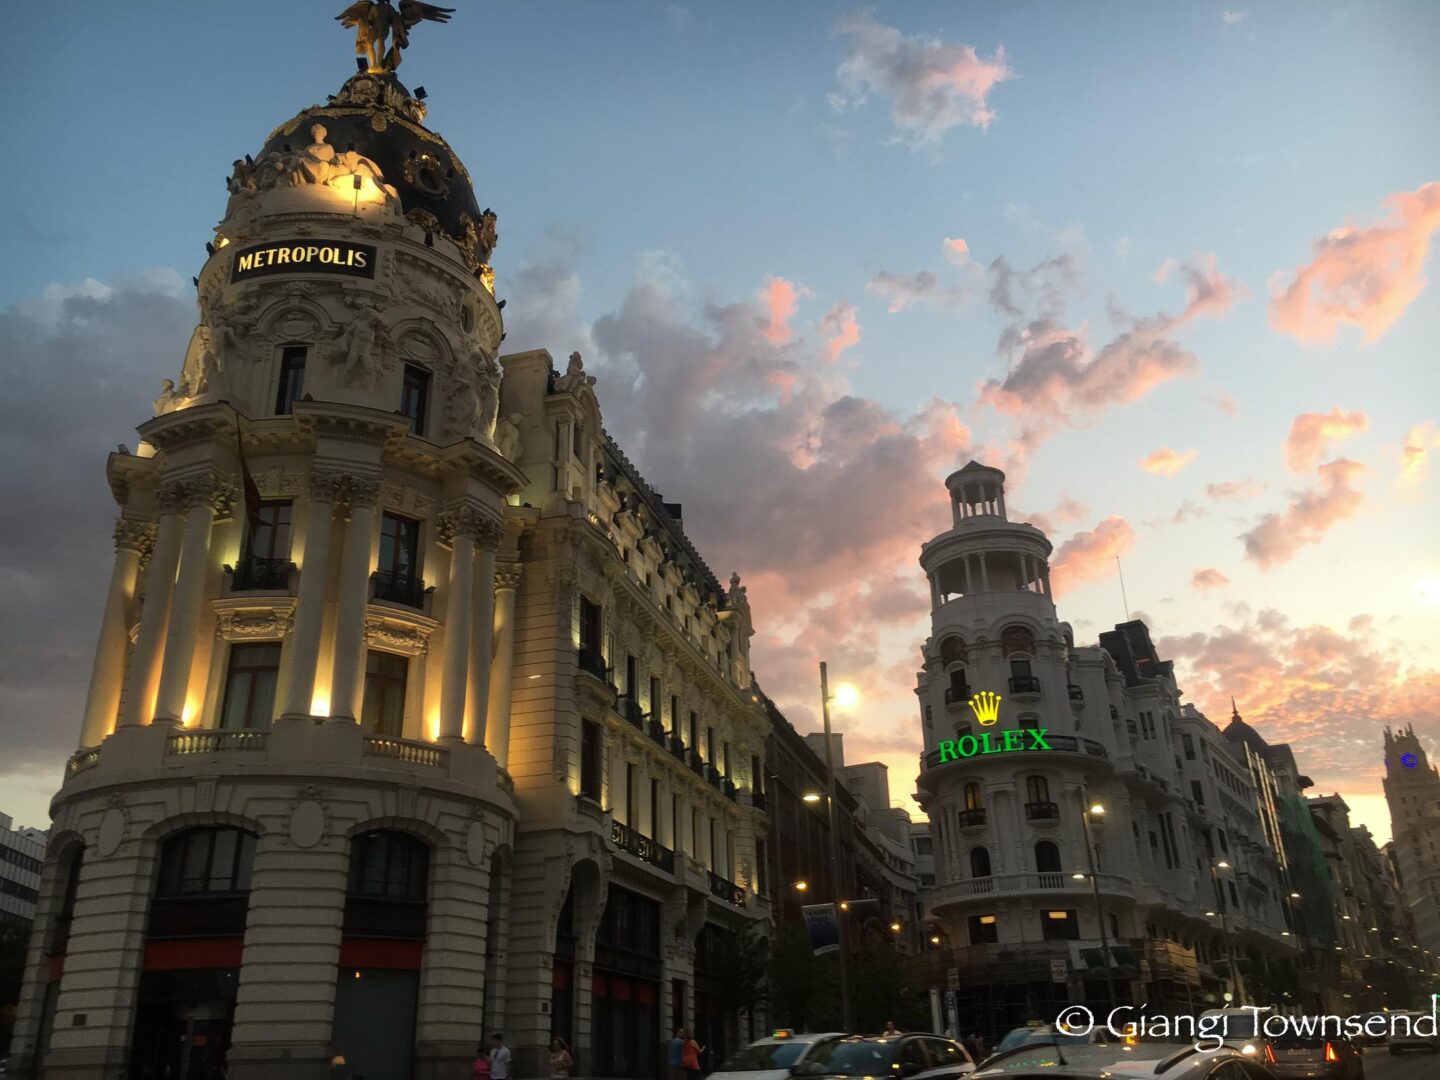 Madrid ~ Finally Made It Across The Atlantic